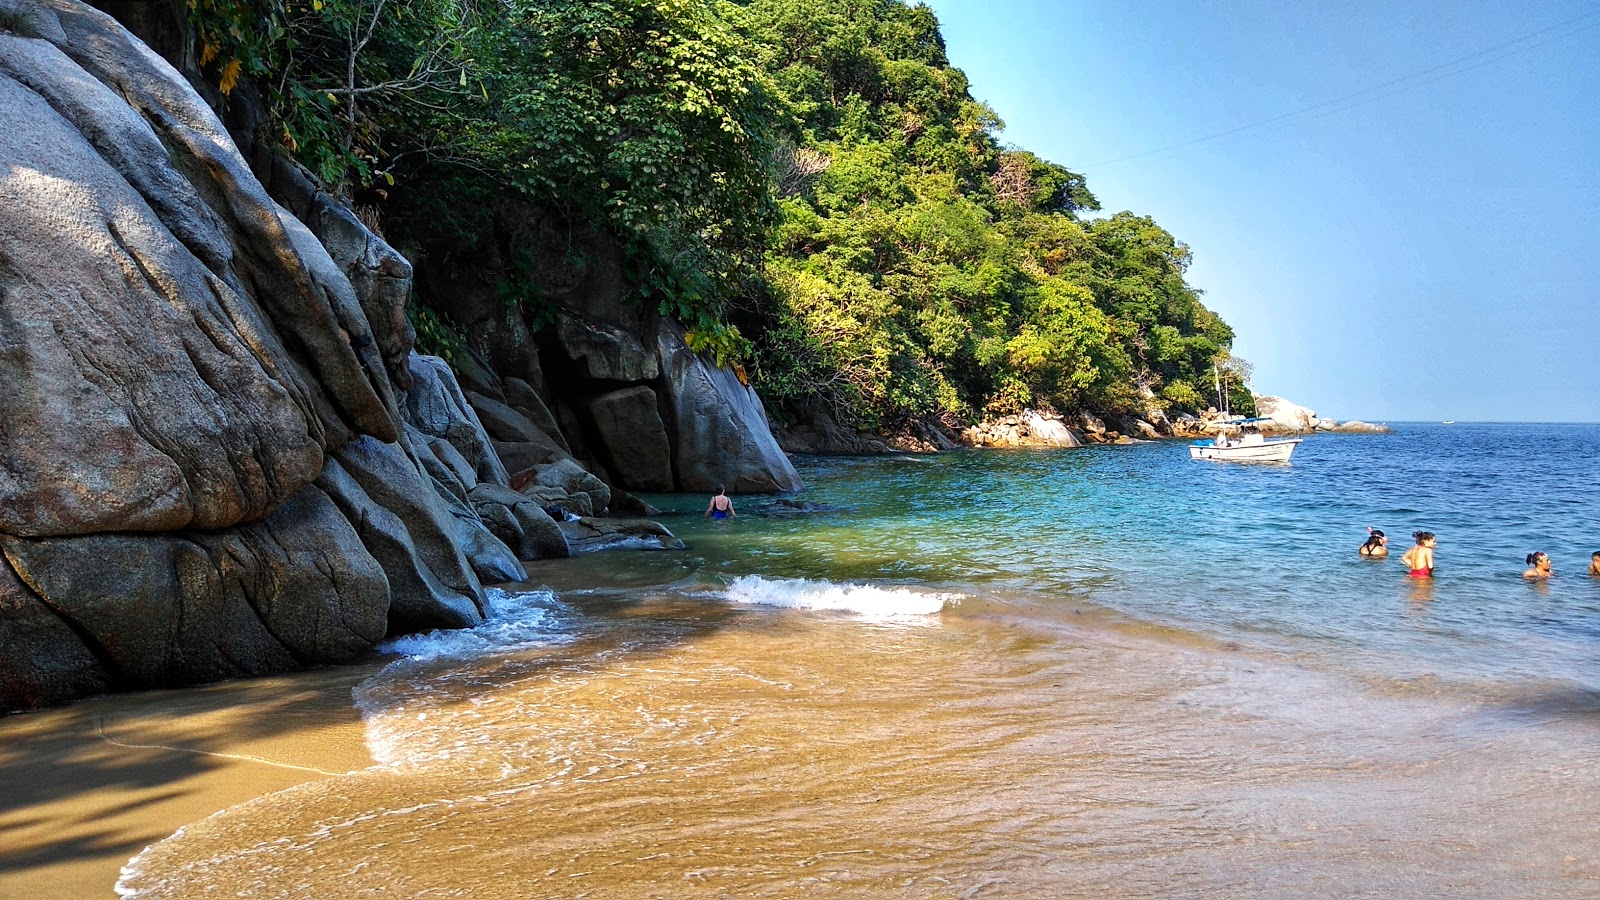 Fotografija Colomitos beach nahaja se v naravnem okolju